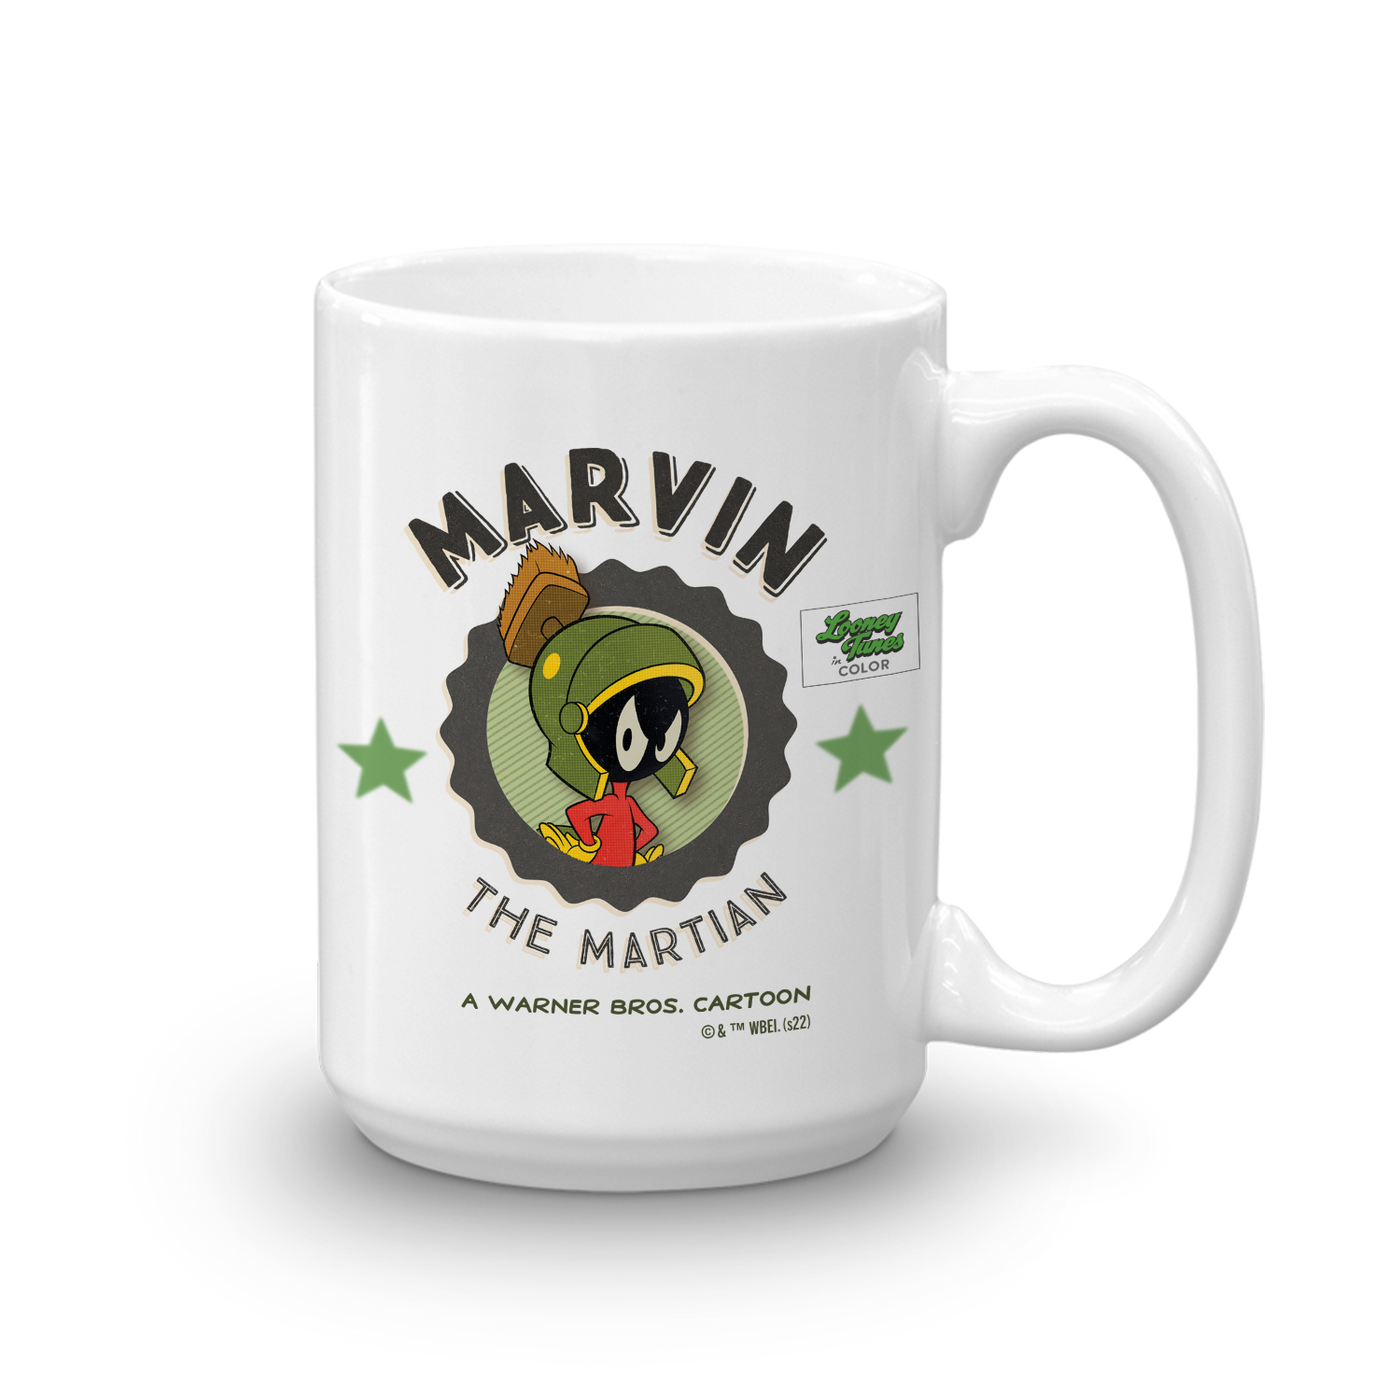 Looney Tunes Marvin the Martian Emblem White Mug